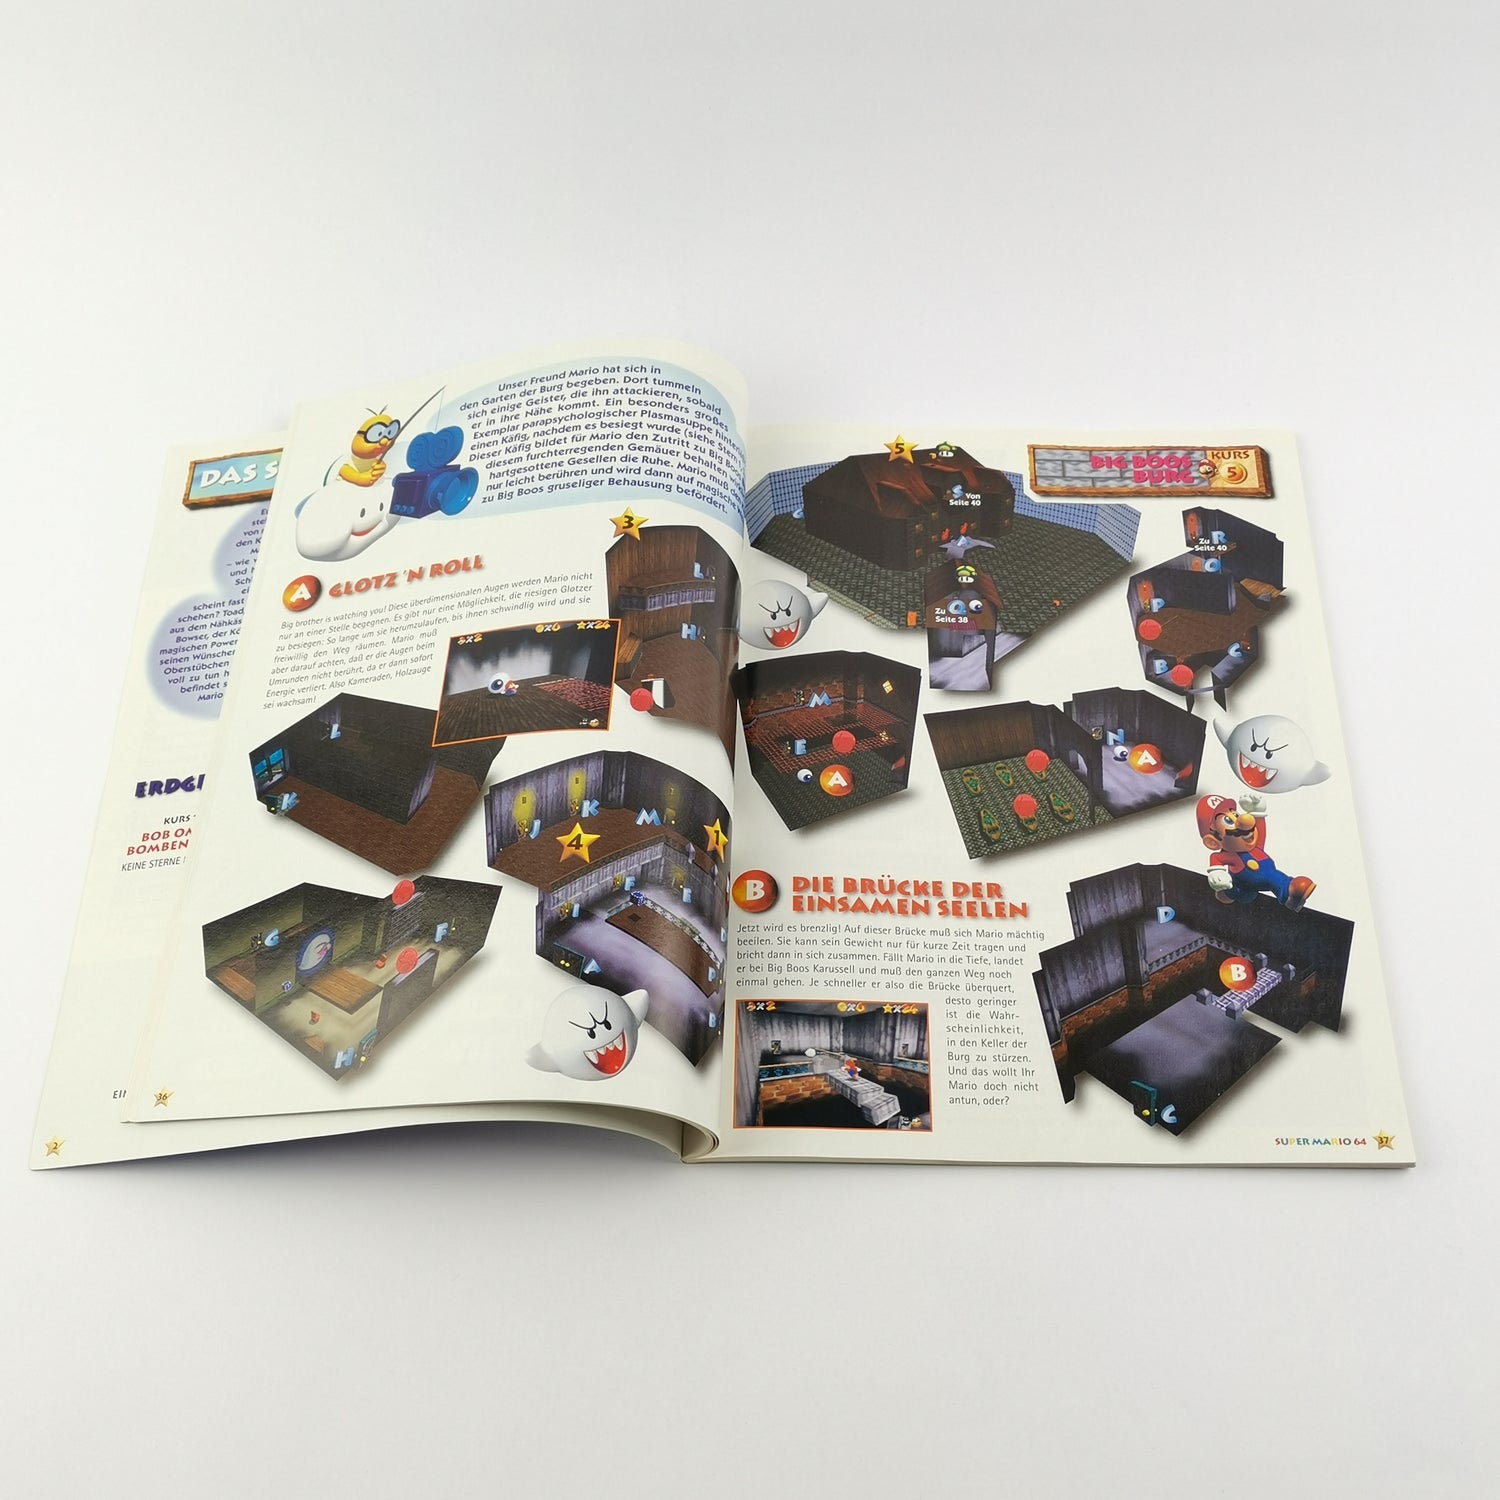 Nintendo 64 game advisor: Super Mario 64 - Guide solution booklet N64 PAL